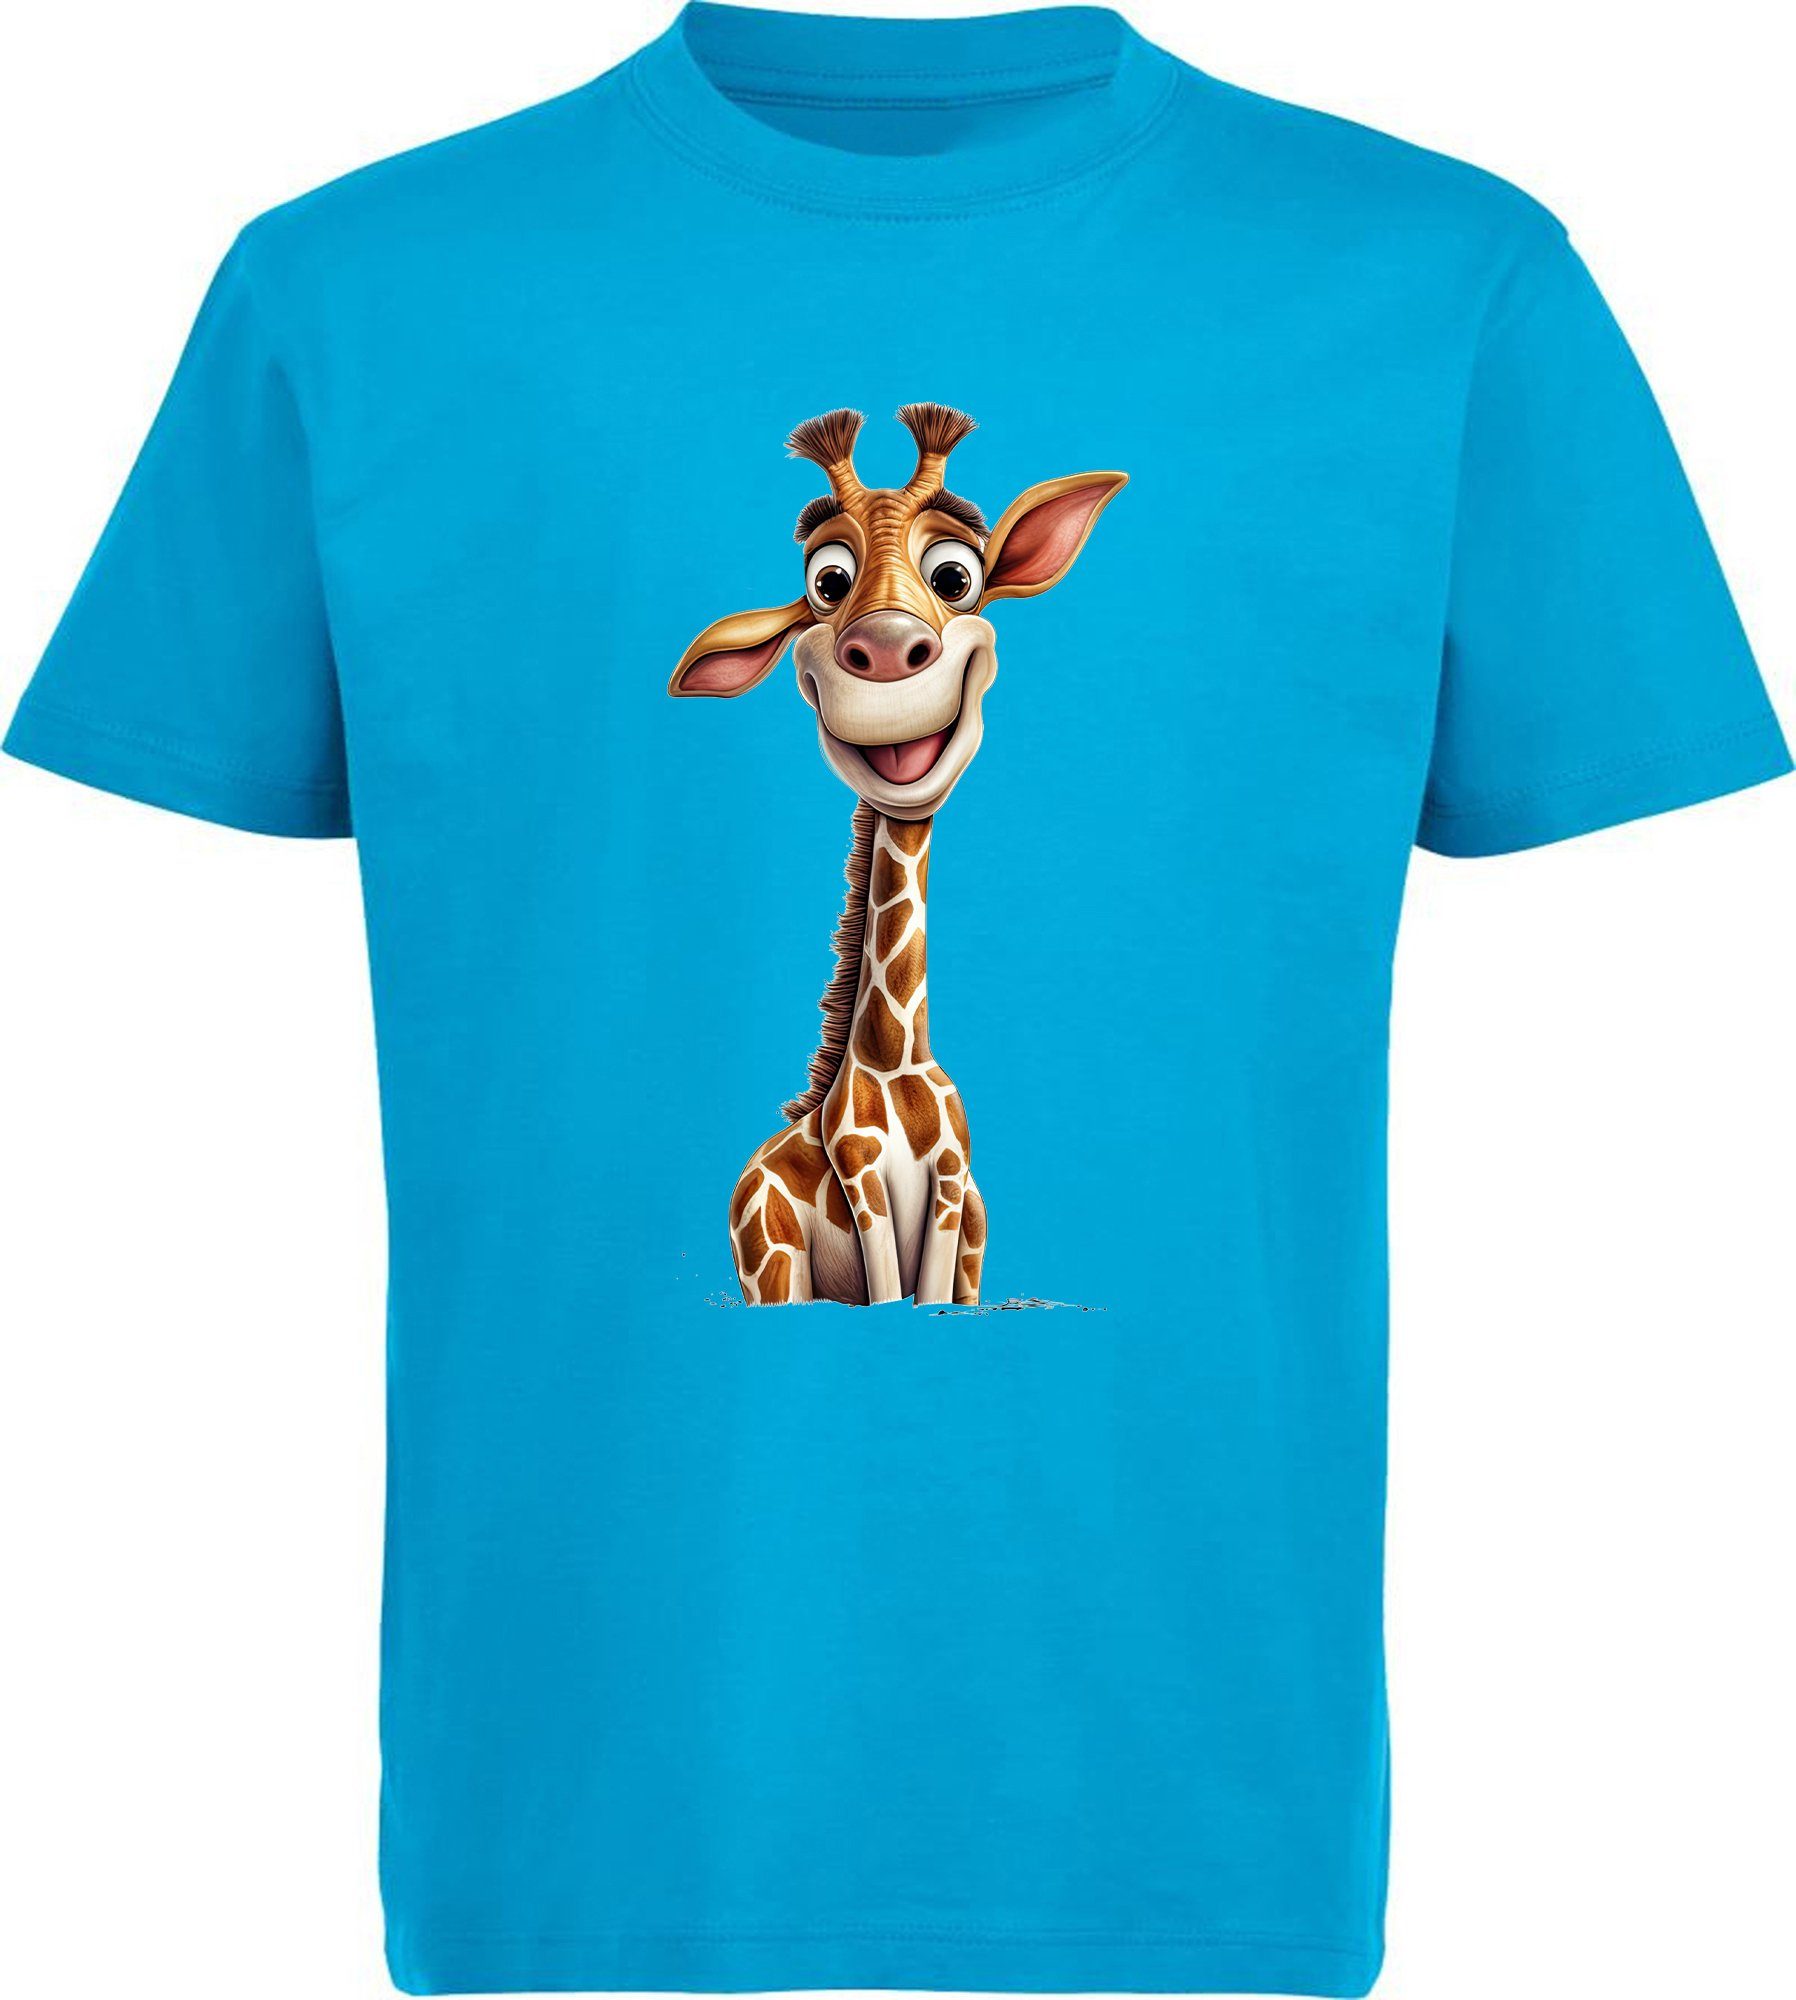 MyDesign24 T-Shirt Kinder Wildtier Print bedruckt aqua blau Baumwollshirt Aufdruck, - Giraffe mit Baby i273 Shirt